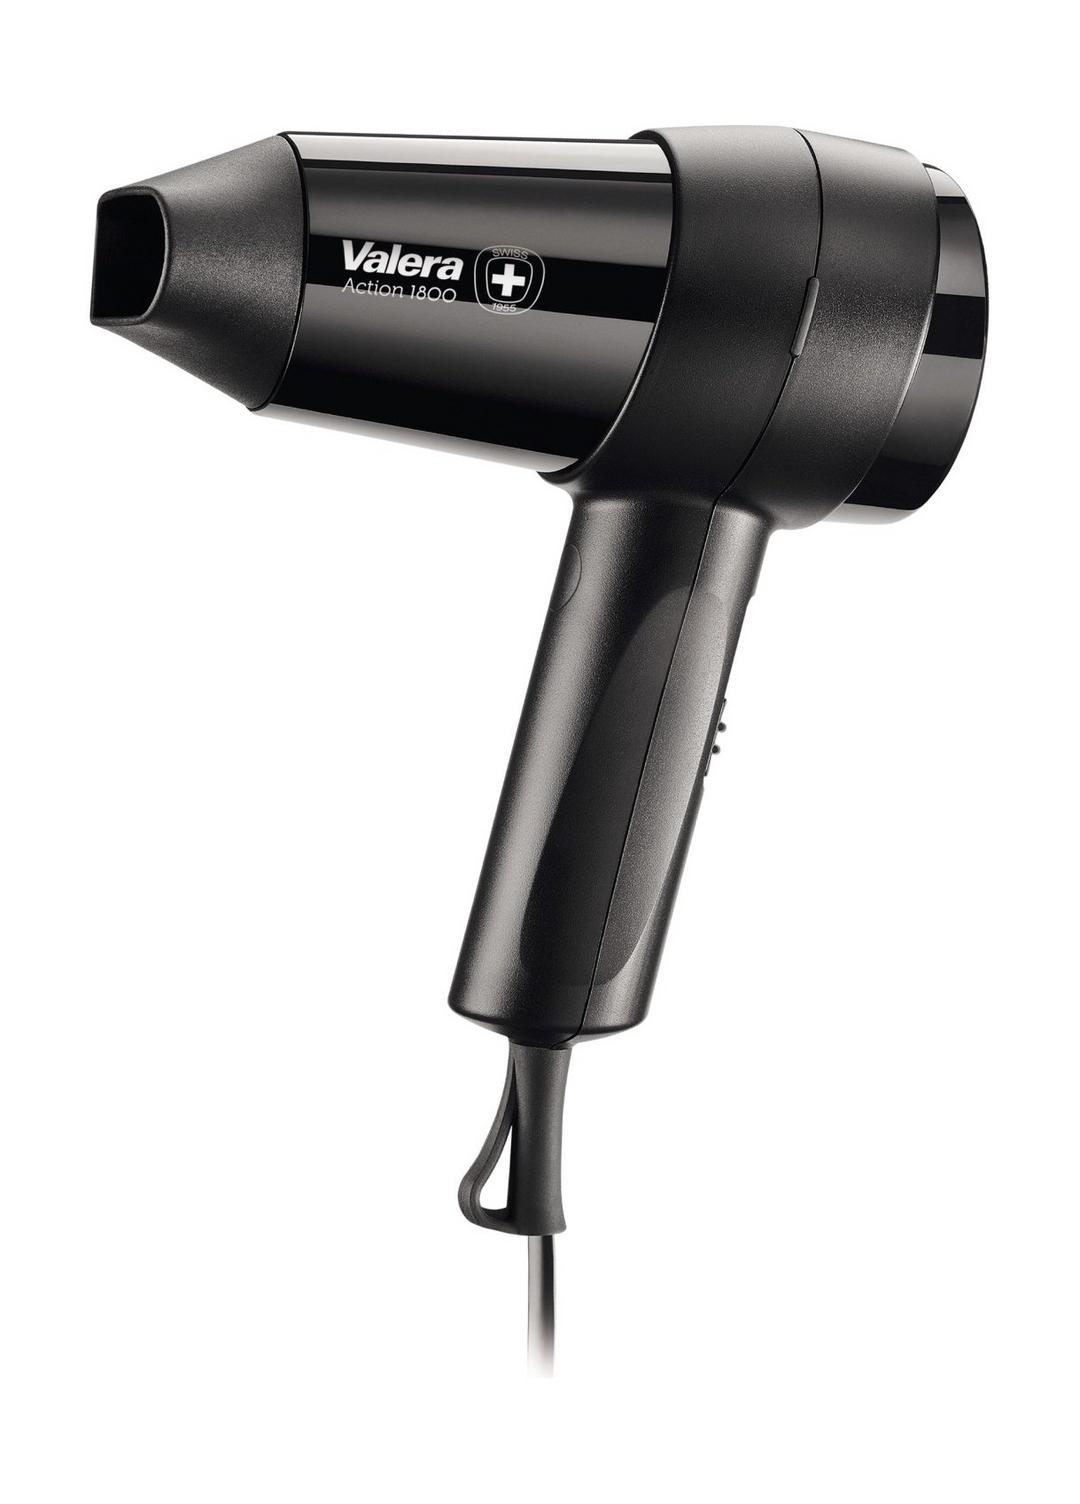 Valera Action 1800W Compact Hairdryer - Black